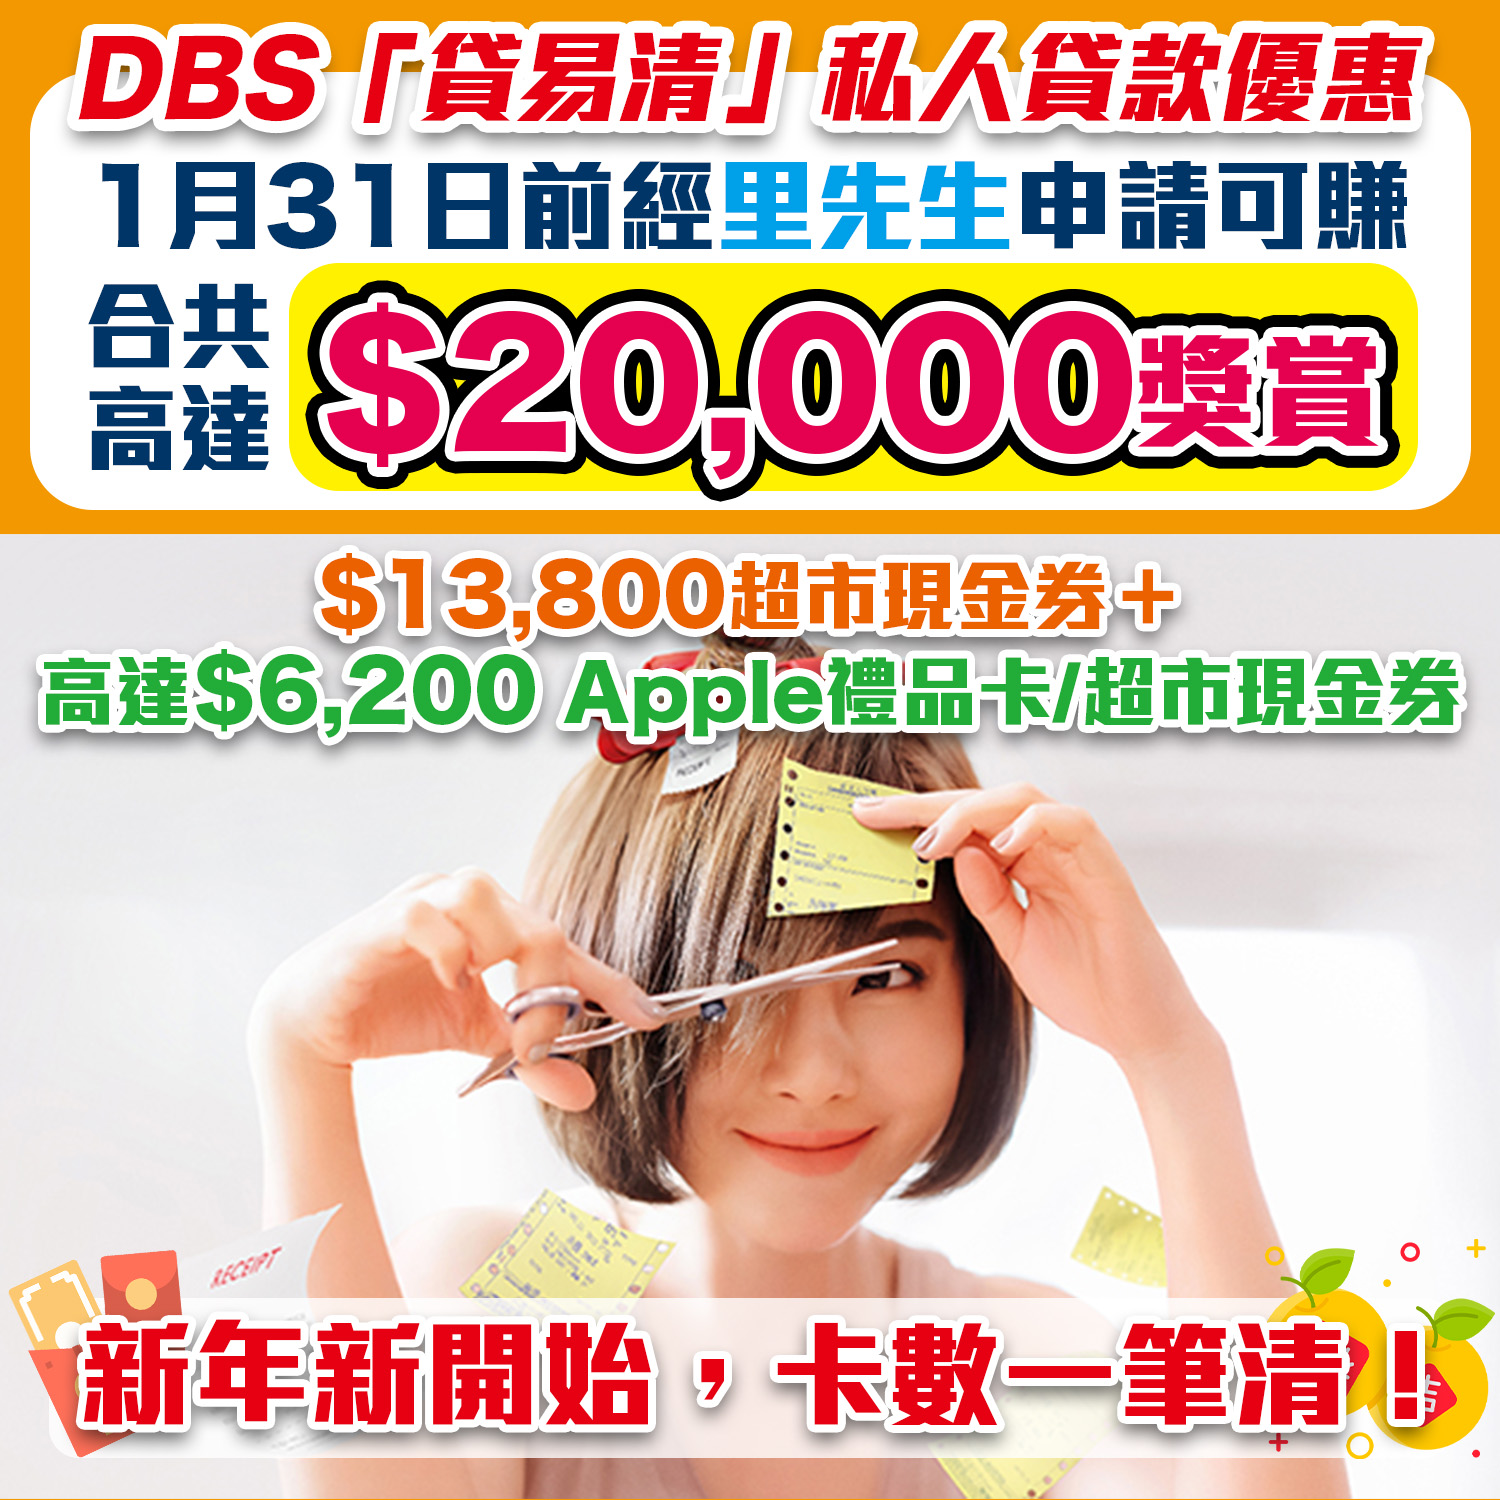 【DBS「貸易清」私人貸款】經里先生成功申請可享高達HK$20,000獎賞！新舊客戶都有優惠！